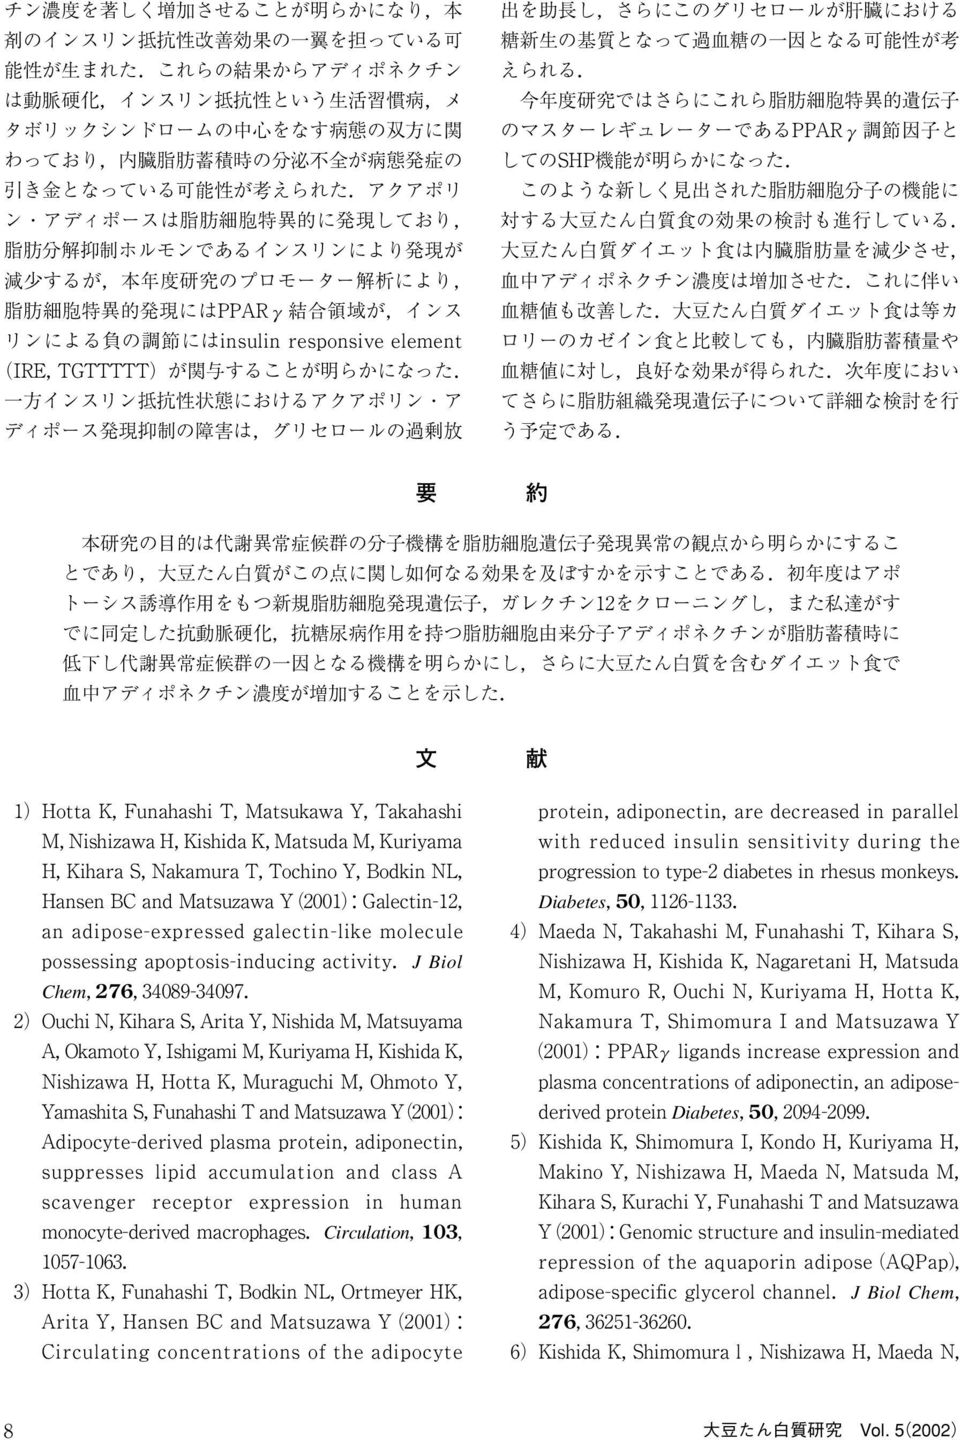 2 Ouchi N, Kihara S, Arita Y, Nishida M, Matsuyama A, Okamoto Y, Ishigami M, Kuriyama H, Kishida K, Nishizawa H, Hotta K, Muraguchi M, Ohmoto Y, Yamashita S, Funahashi T and Matsuzawa Y (21) :